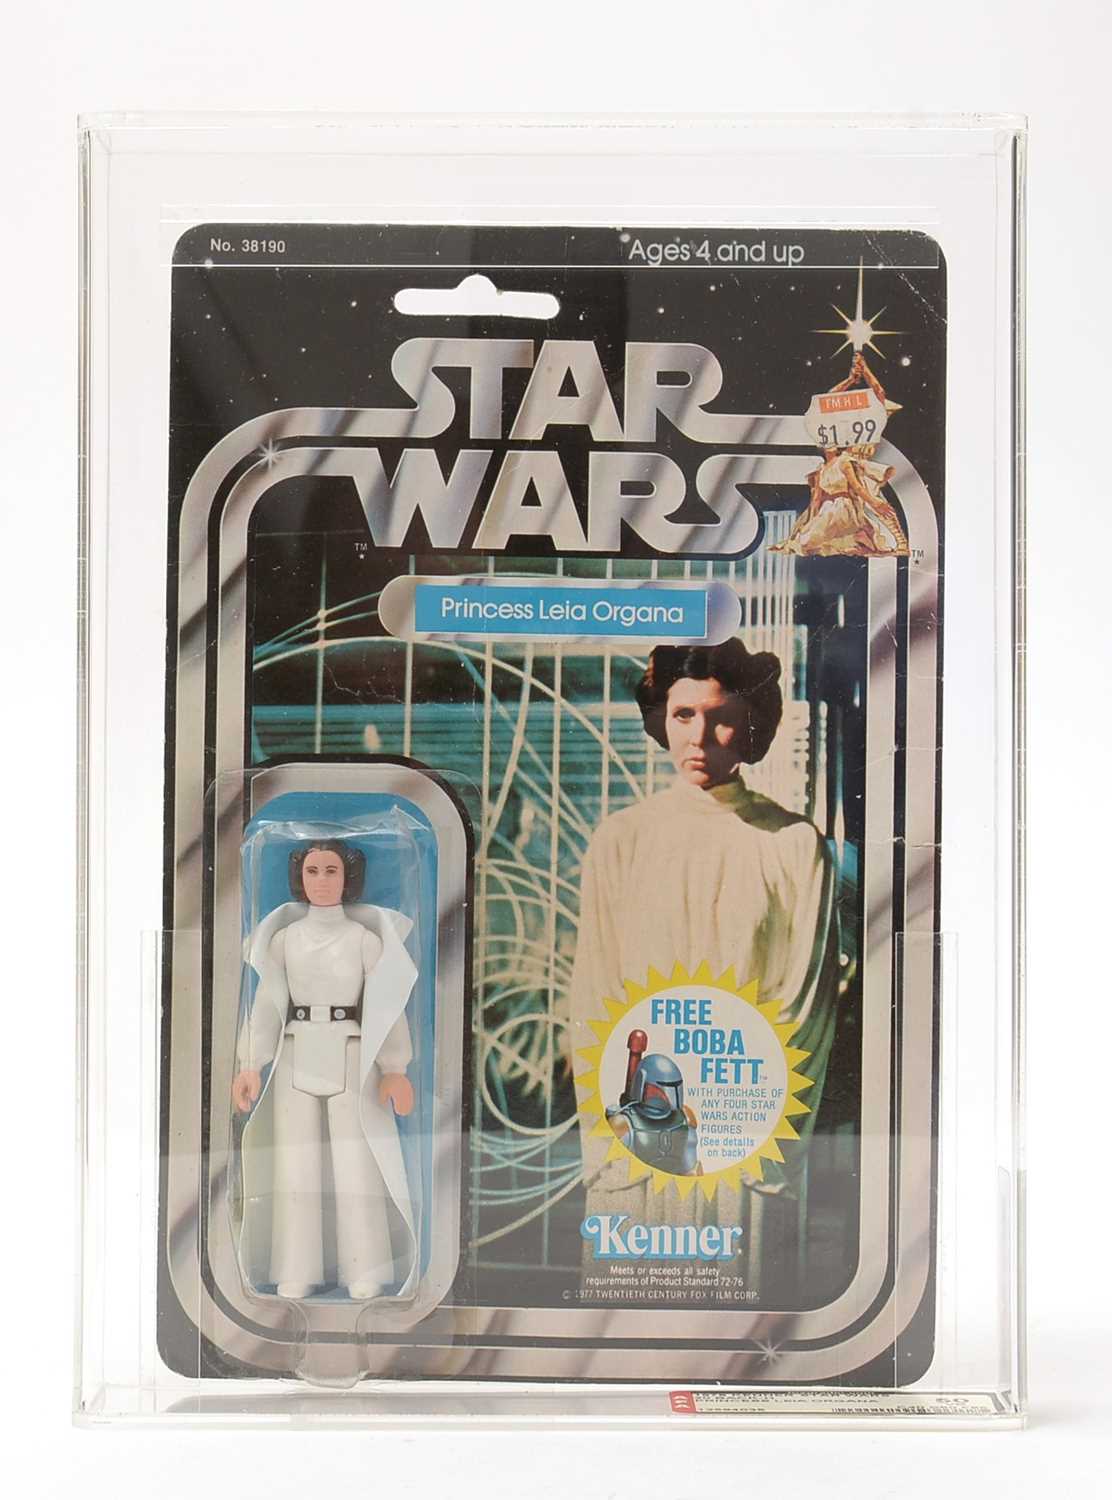 291 - Star Wars Princess Leia Organa carded figure